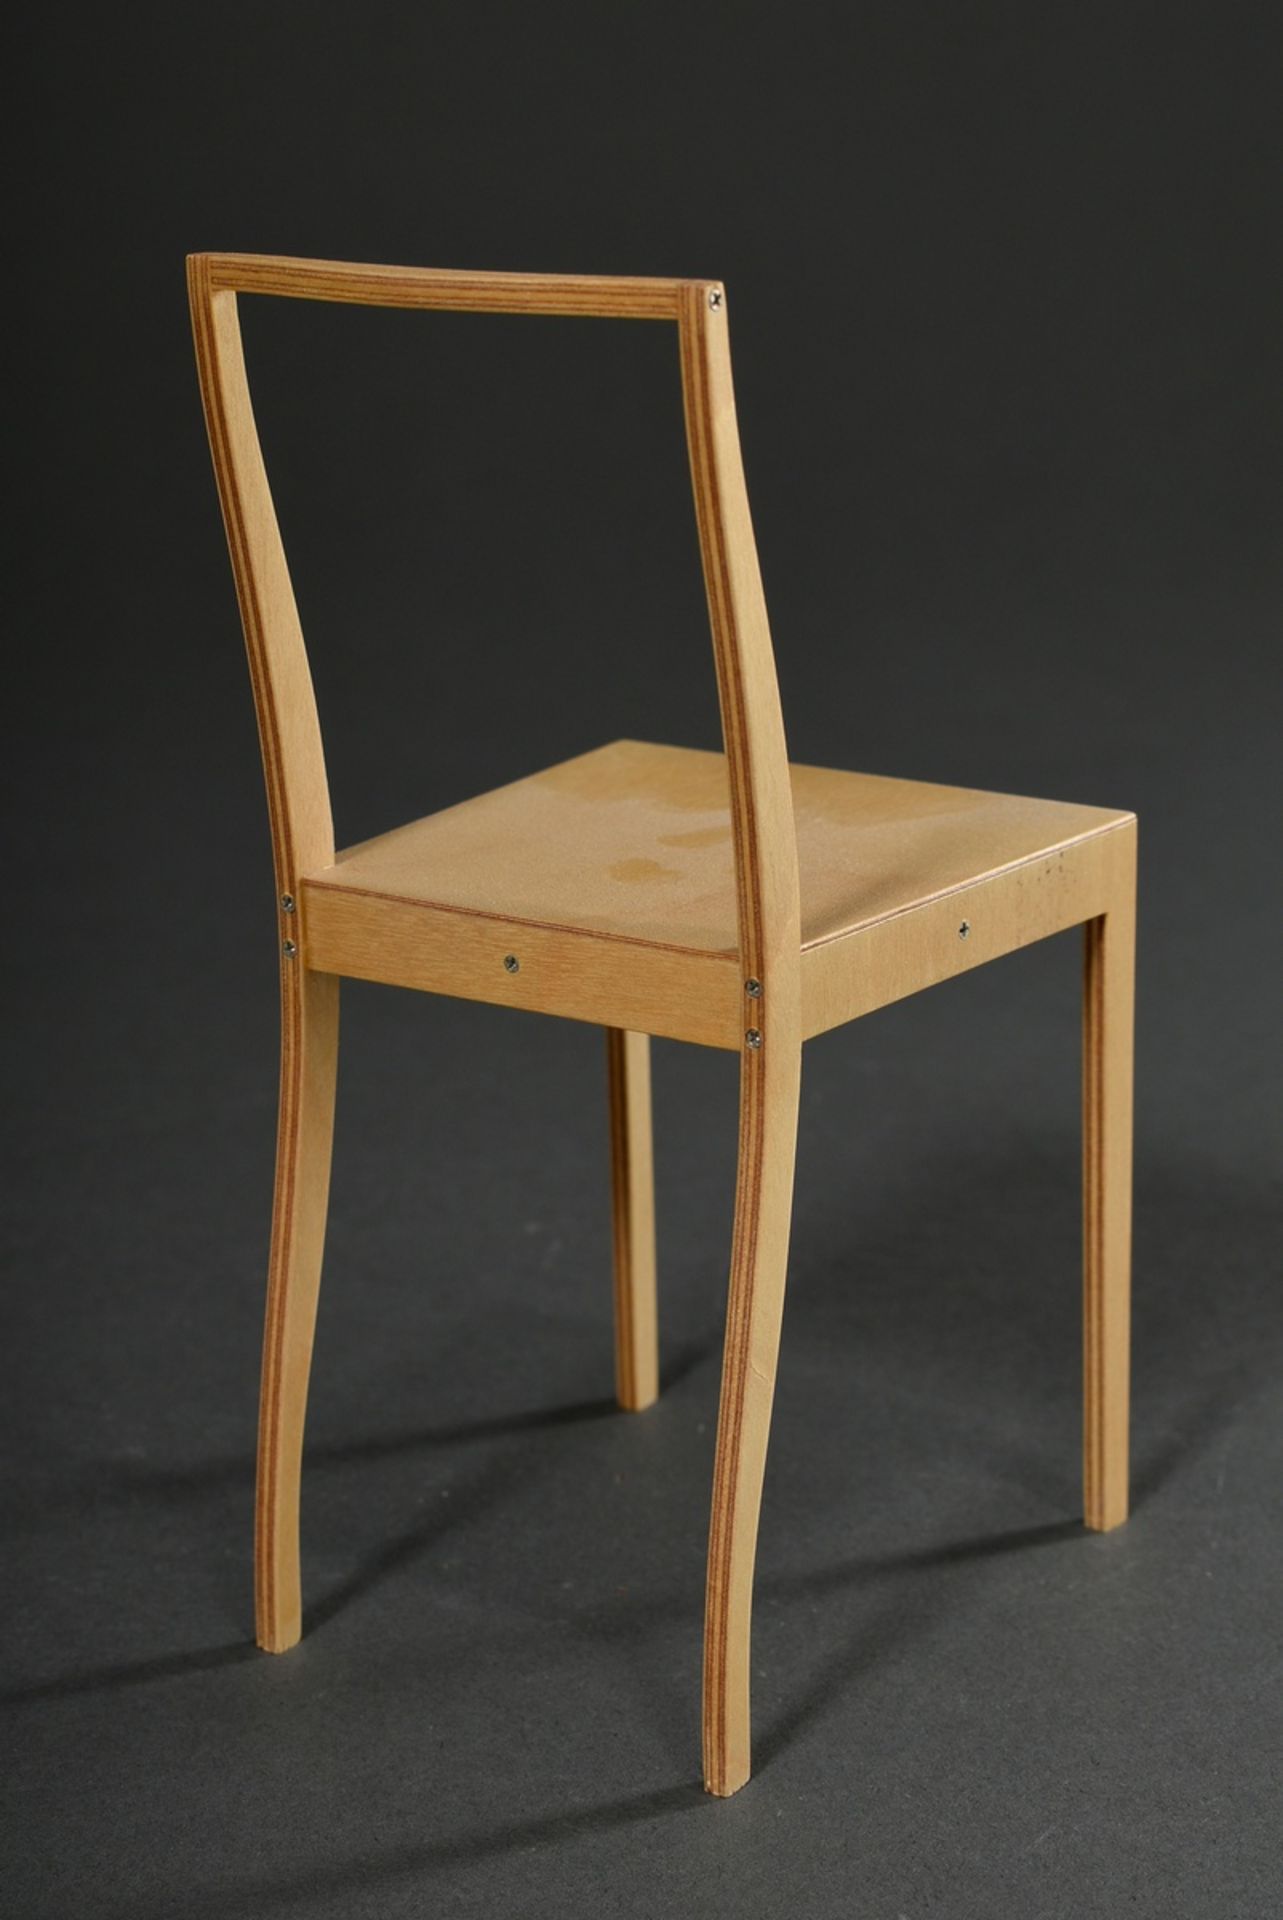 Miniature model chair "Ply Chair", design: Jasper Morrison, 1989 plywood, Vitra Design Museum, Mini - Image 3 of 3